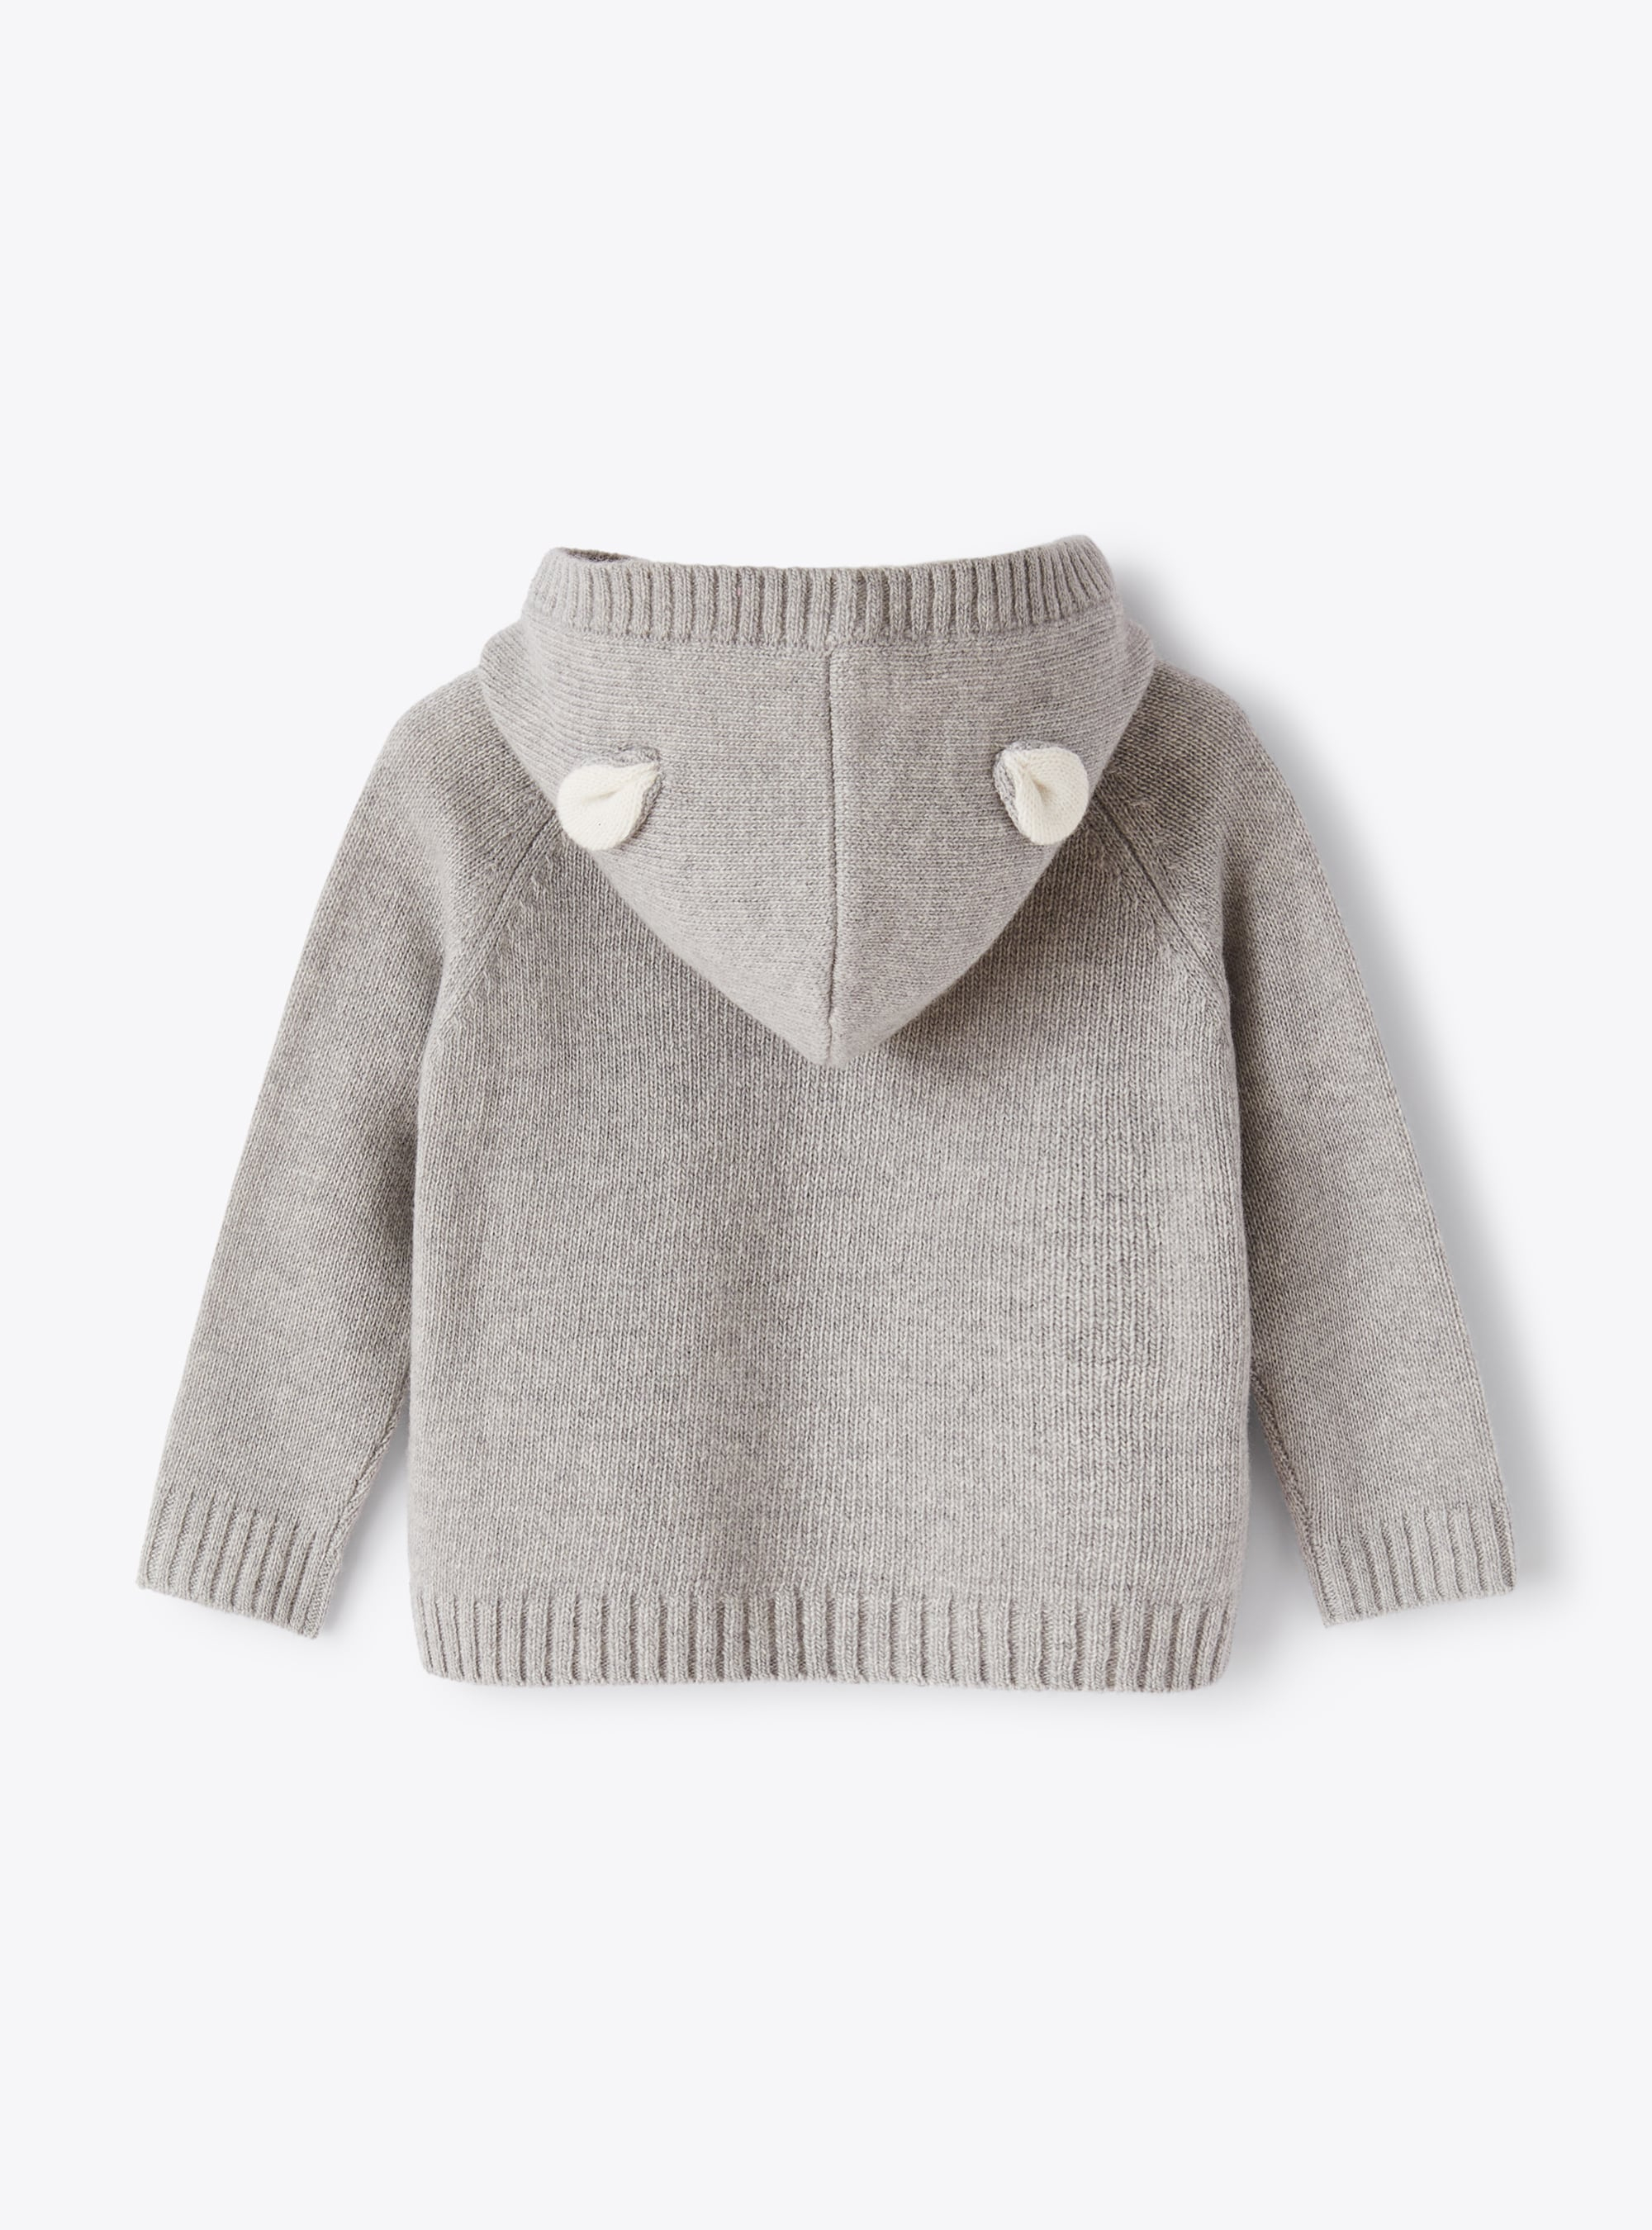 Bear face hooded sweater - Grey | Il Gufo